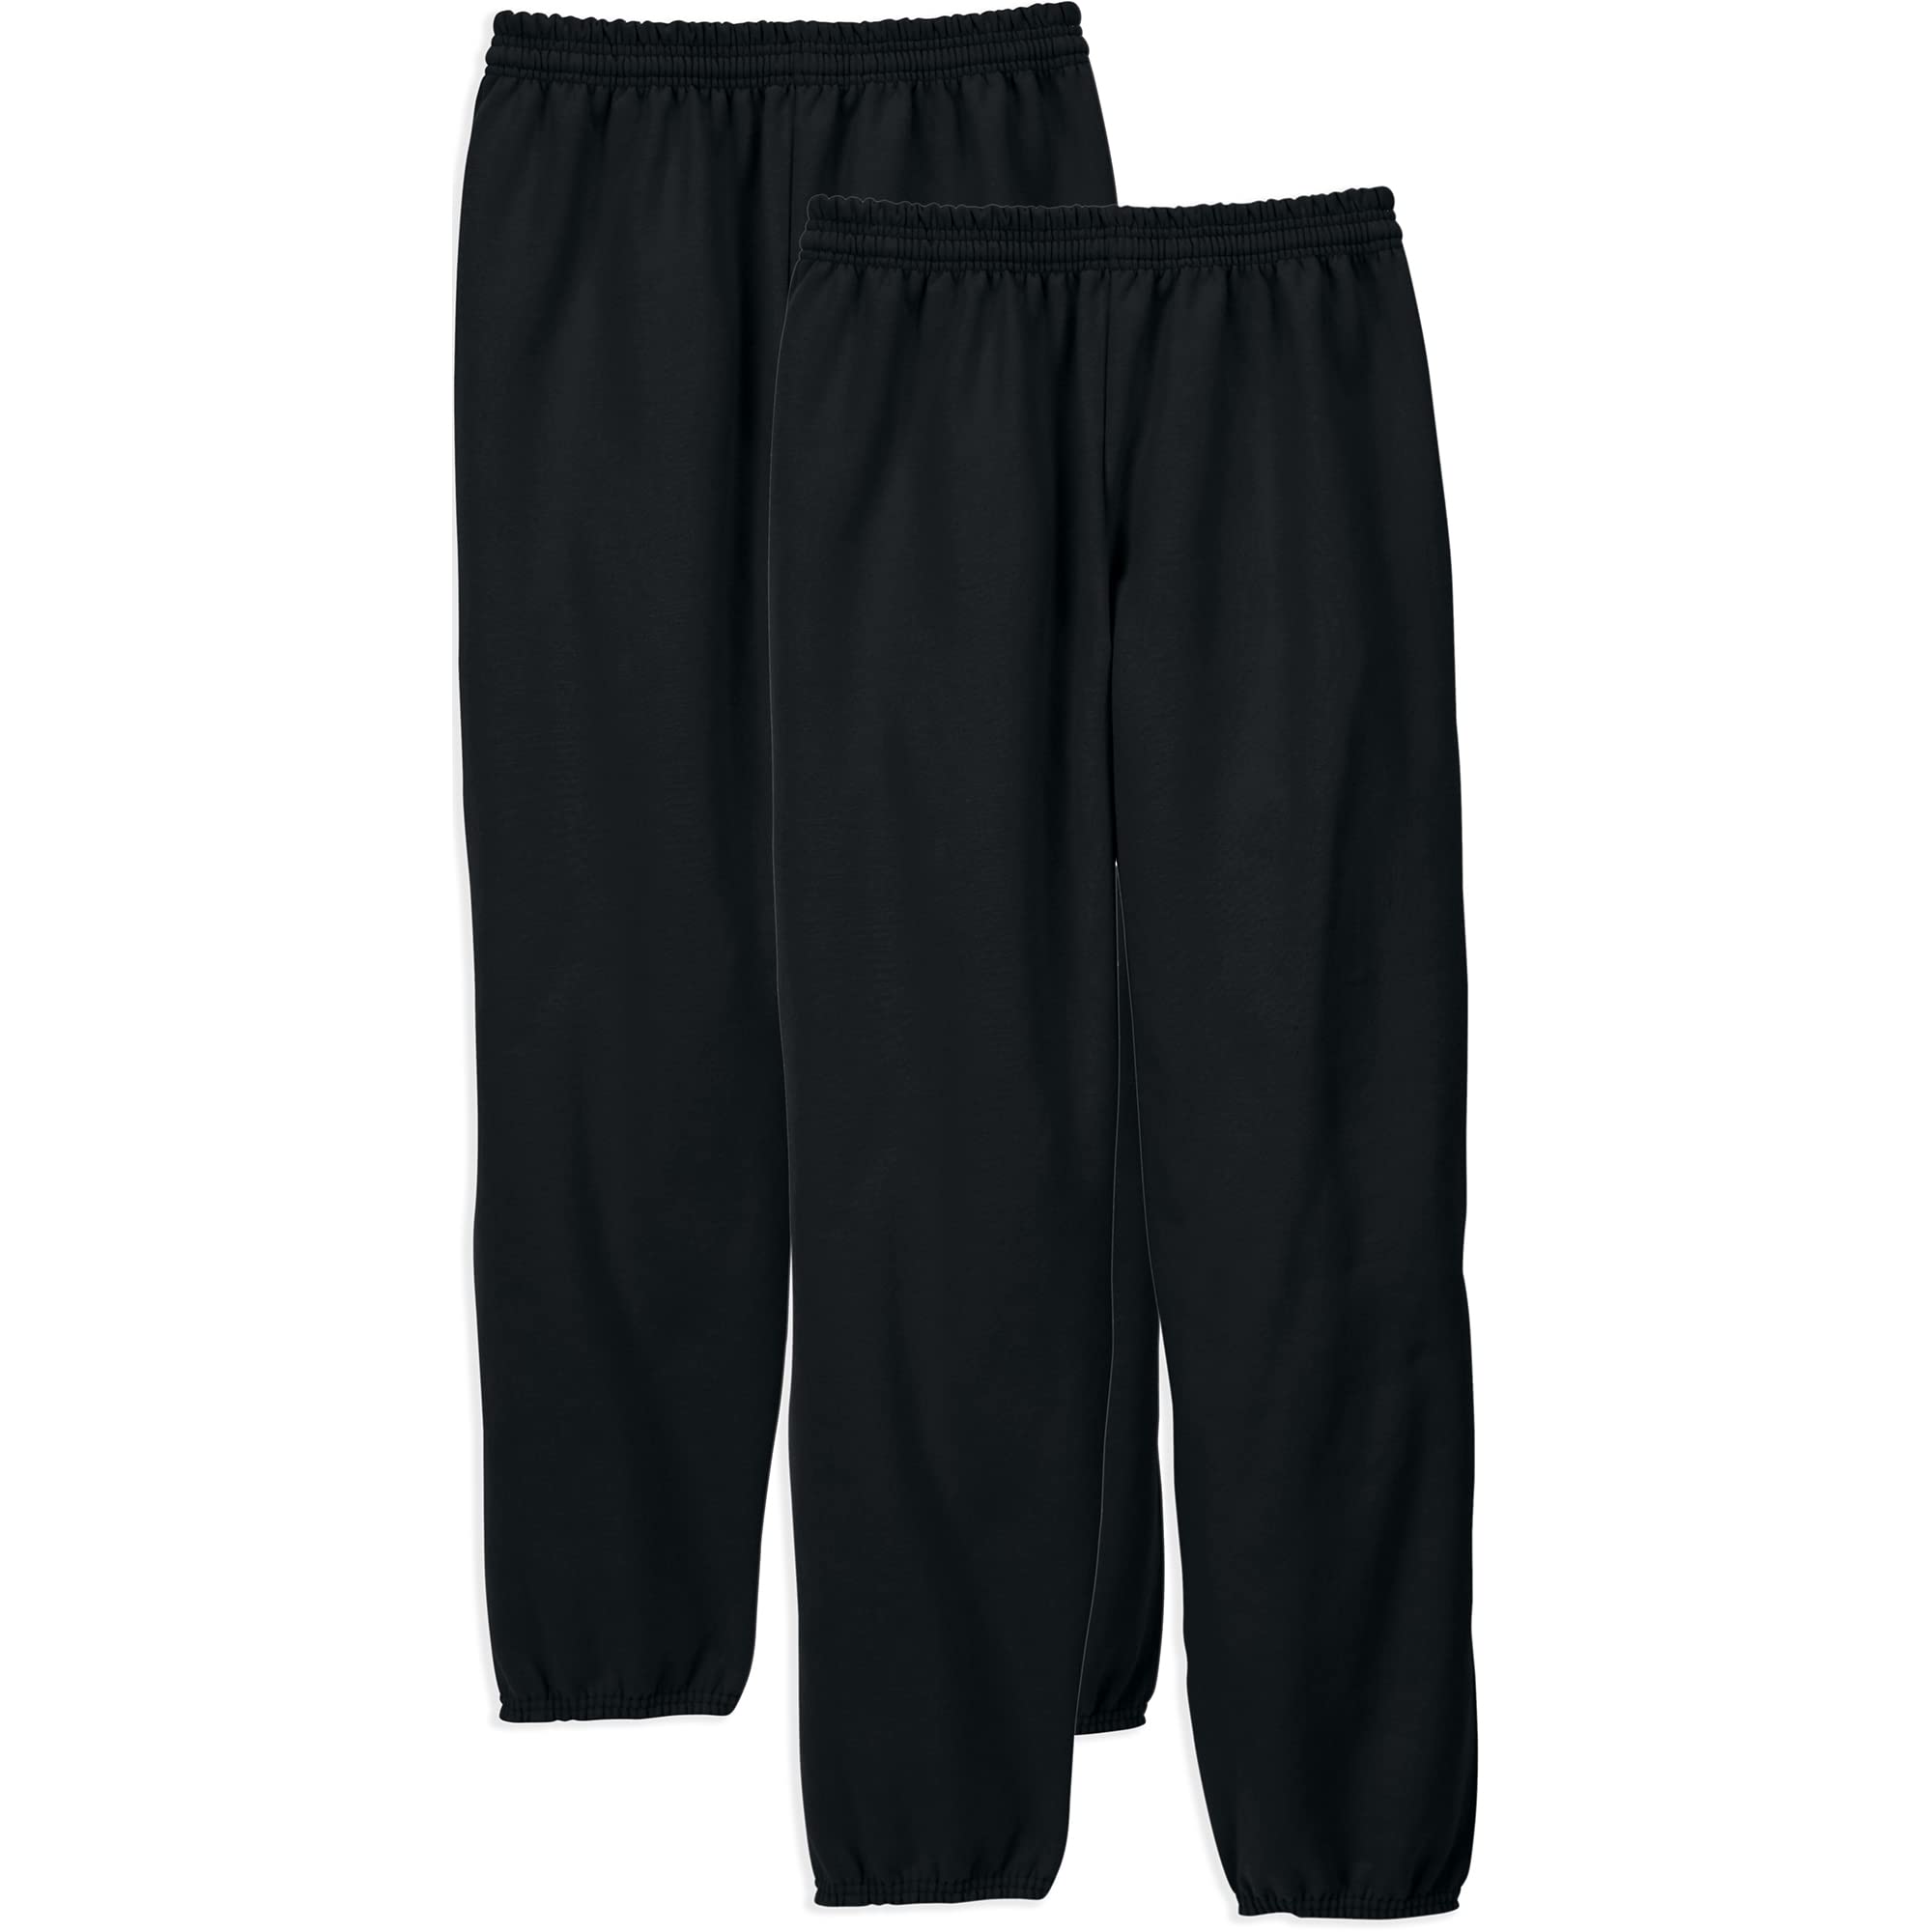 Hanes Men's Sweatpants, EcoSmart Best Sweatpants for Men, Men's Athletic  Lounge Pants with Cinched Cuffs (1 or 2 Pack Option)